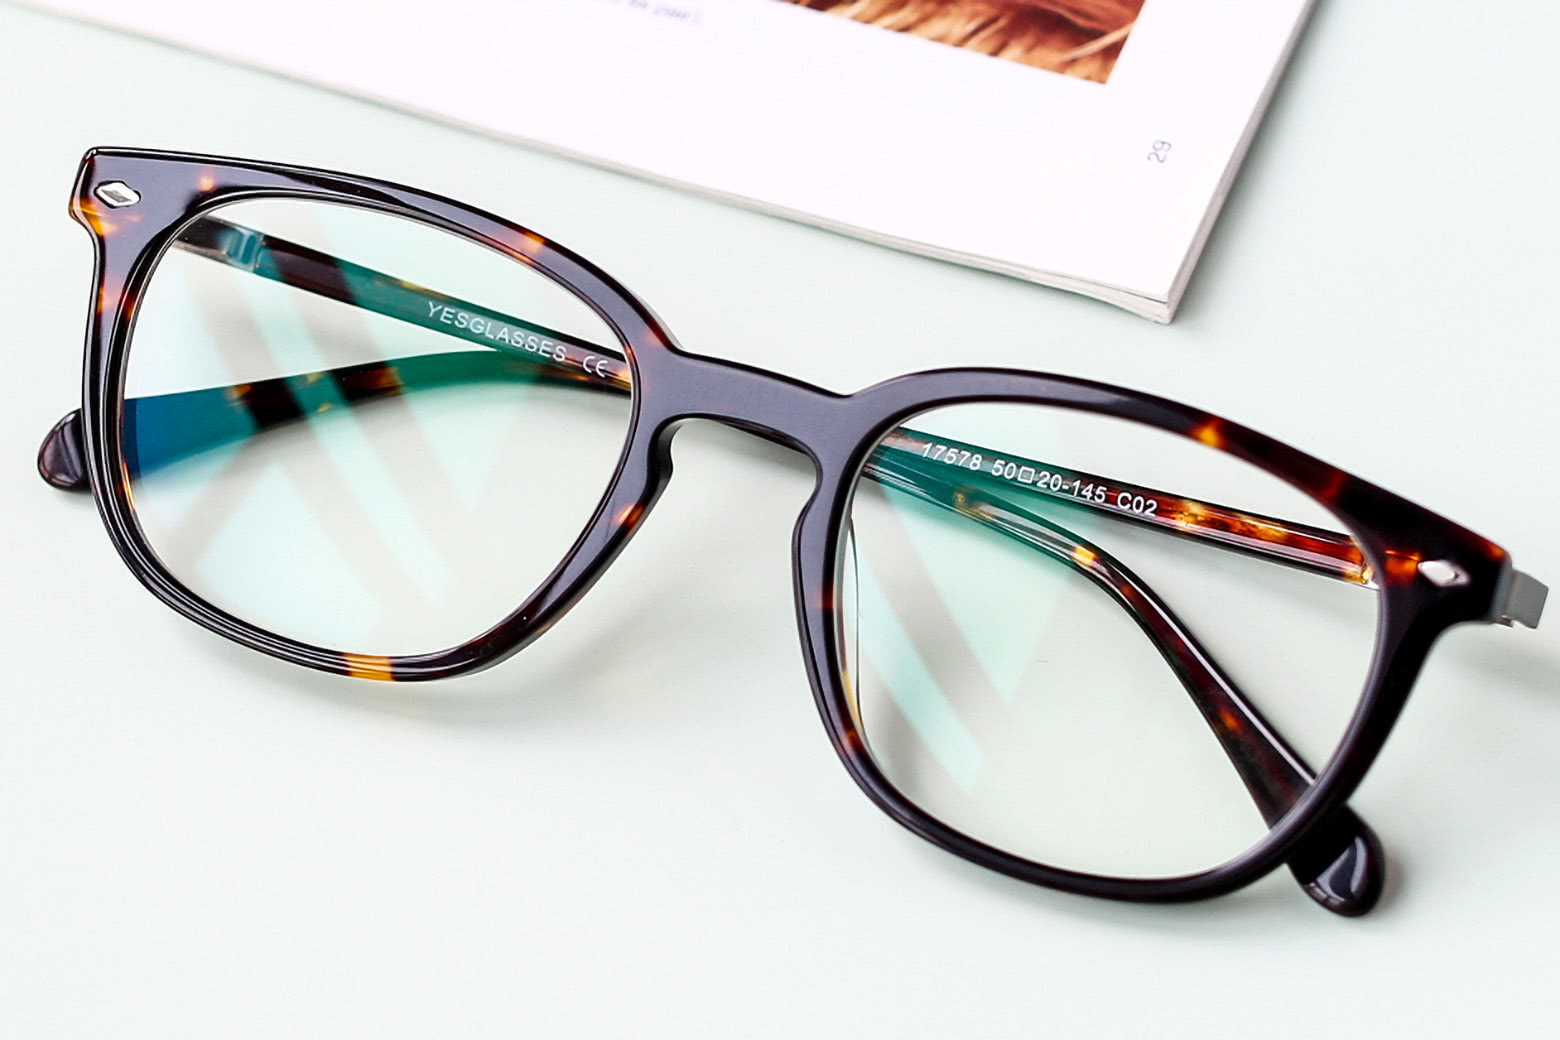 yesglasses glasses deals discounts - Luxe Digital